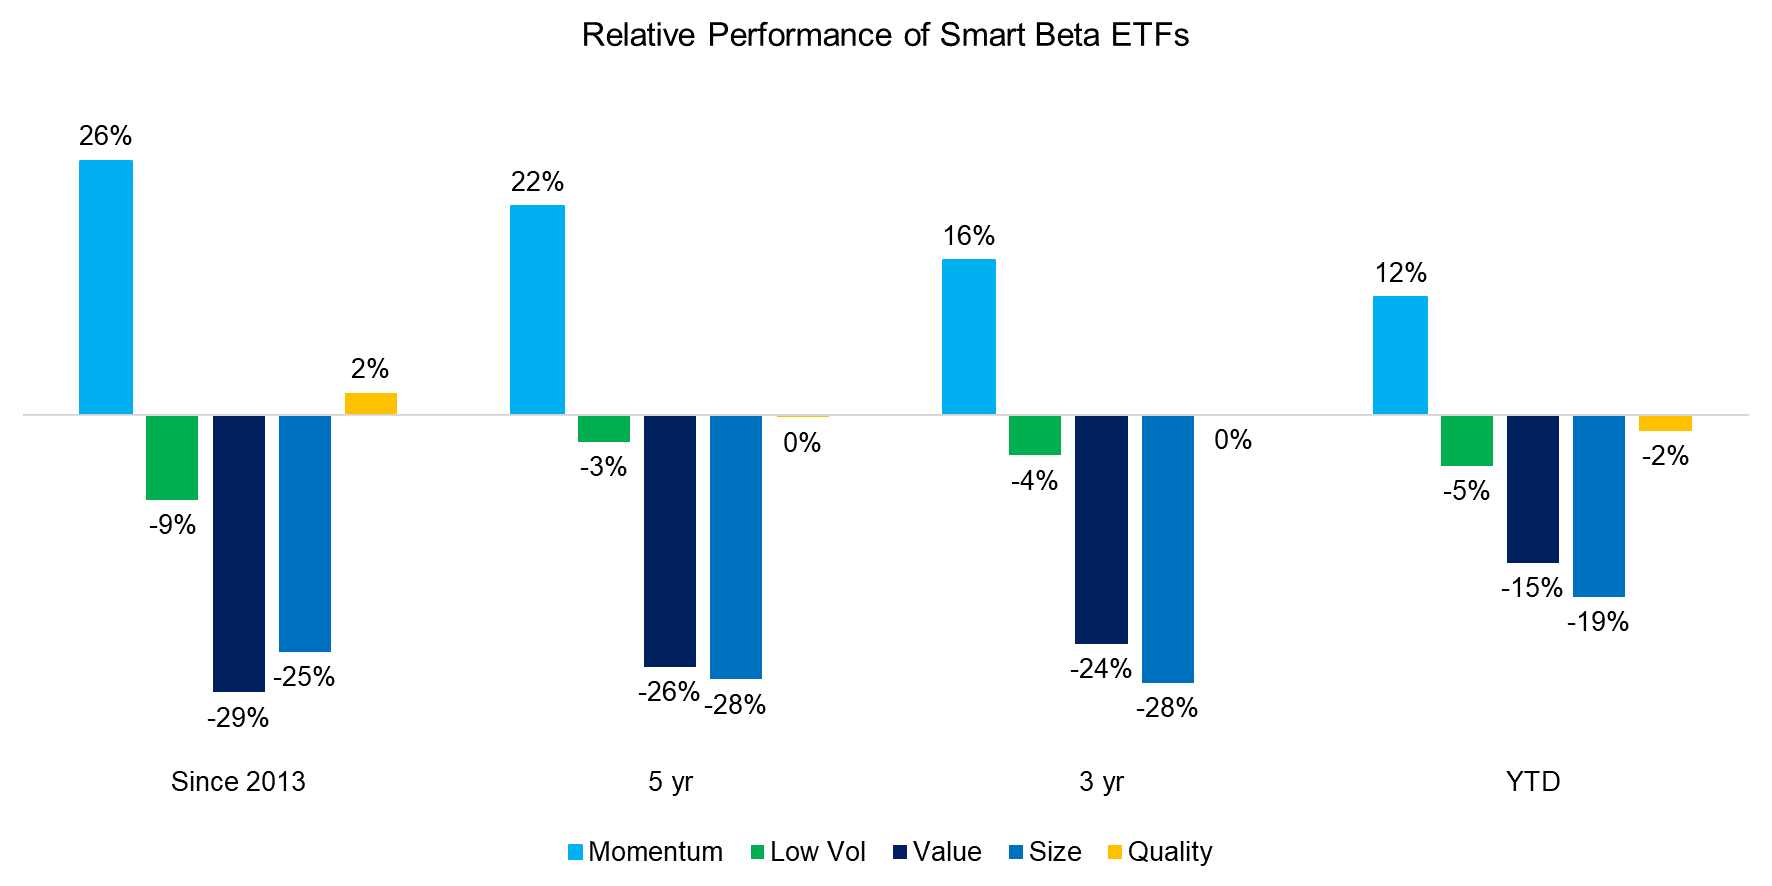 Relative Performance of Popular Smart Beta ETFs